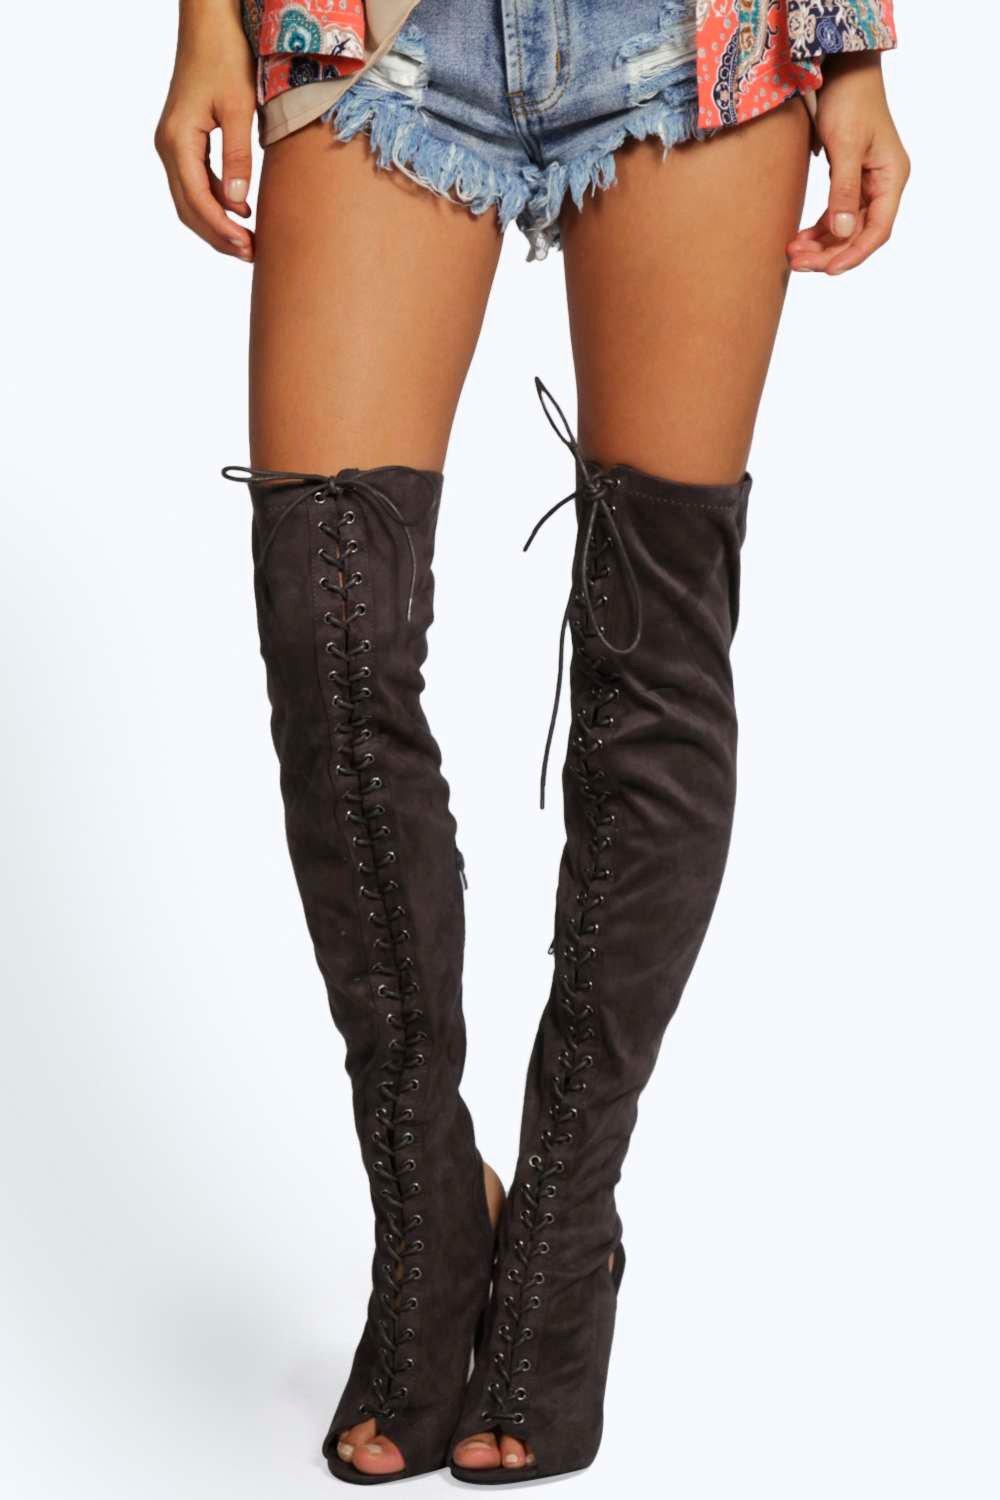 Boohoo Womens Leah Peeptoe Thigh High Lace Up Heels | eBay